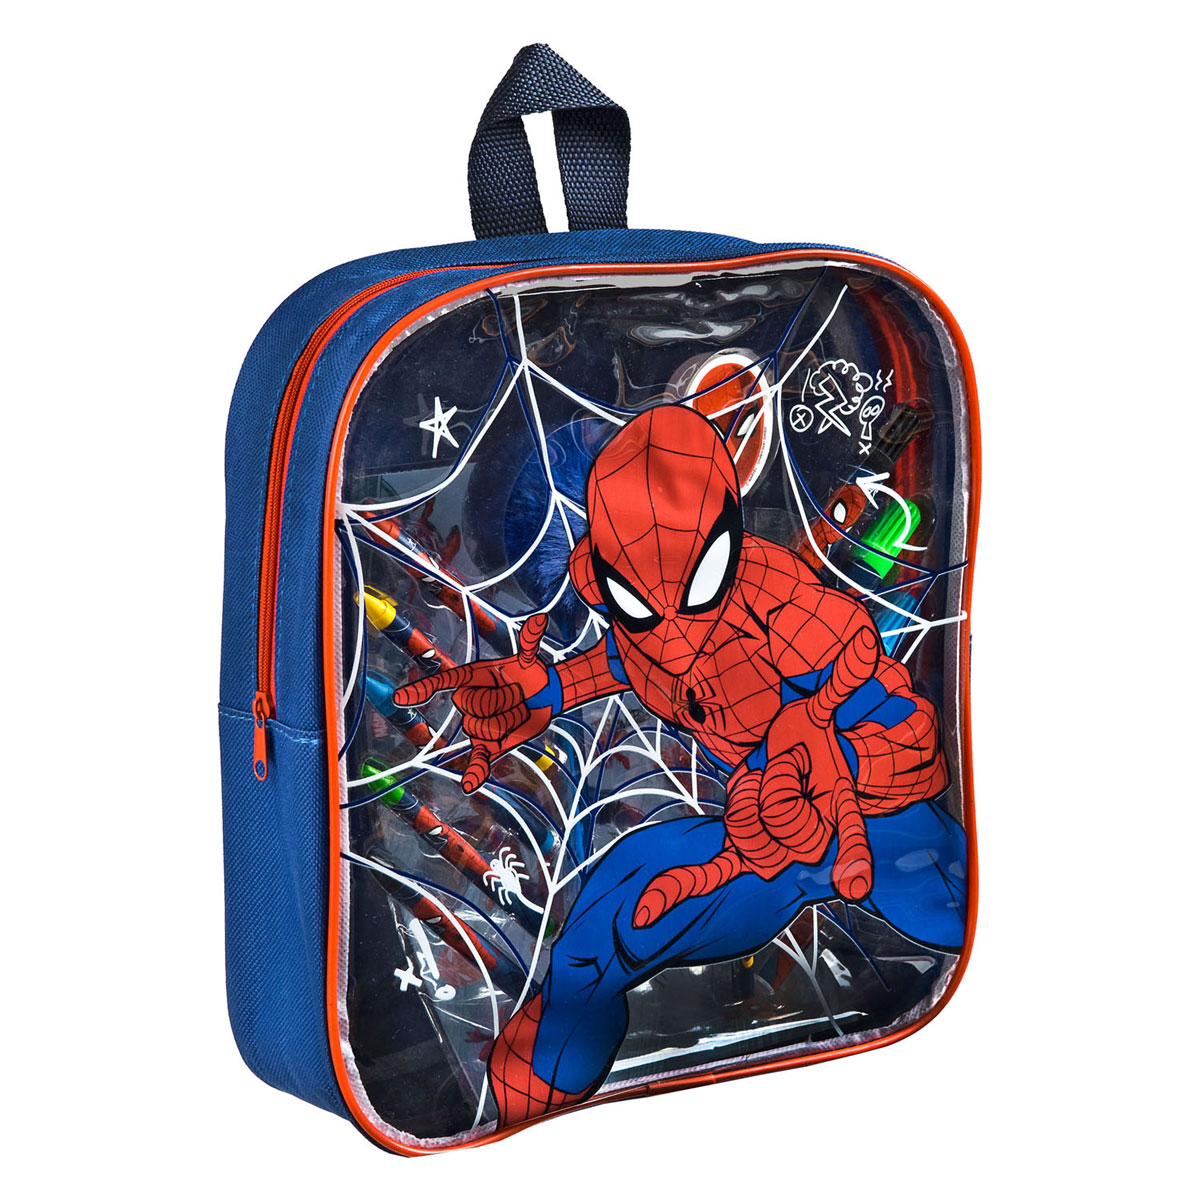 Farbset Spiderman im Rucksack